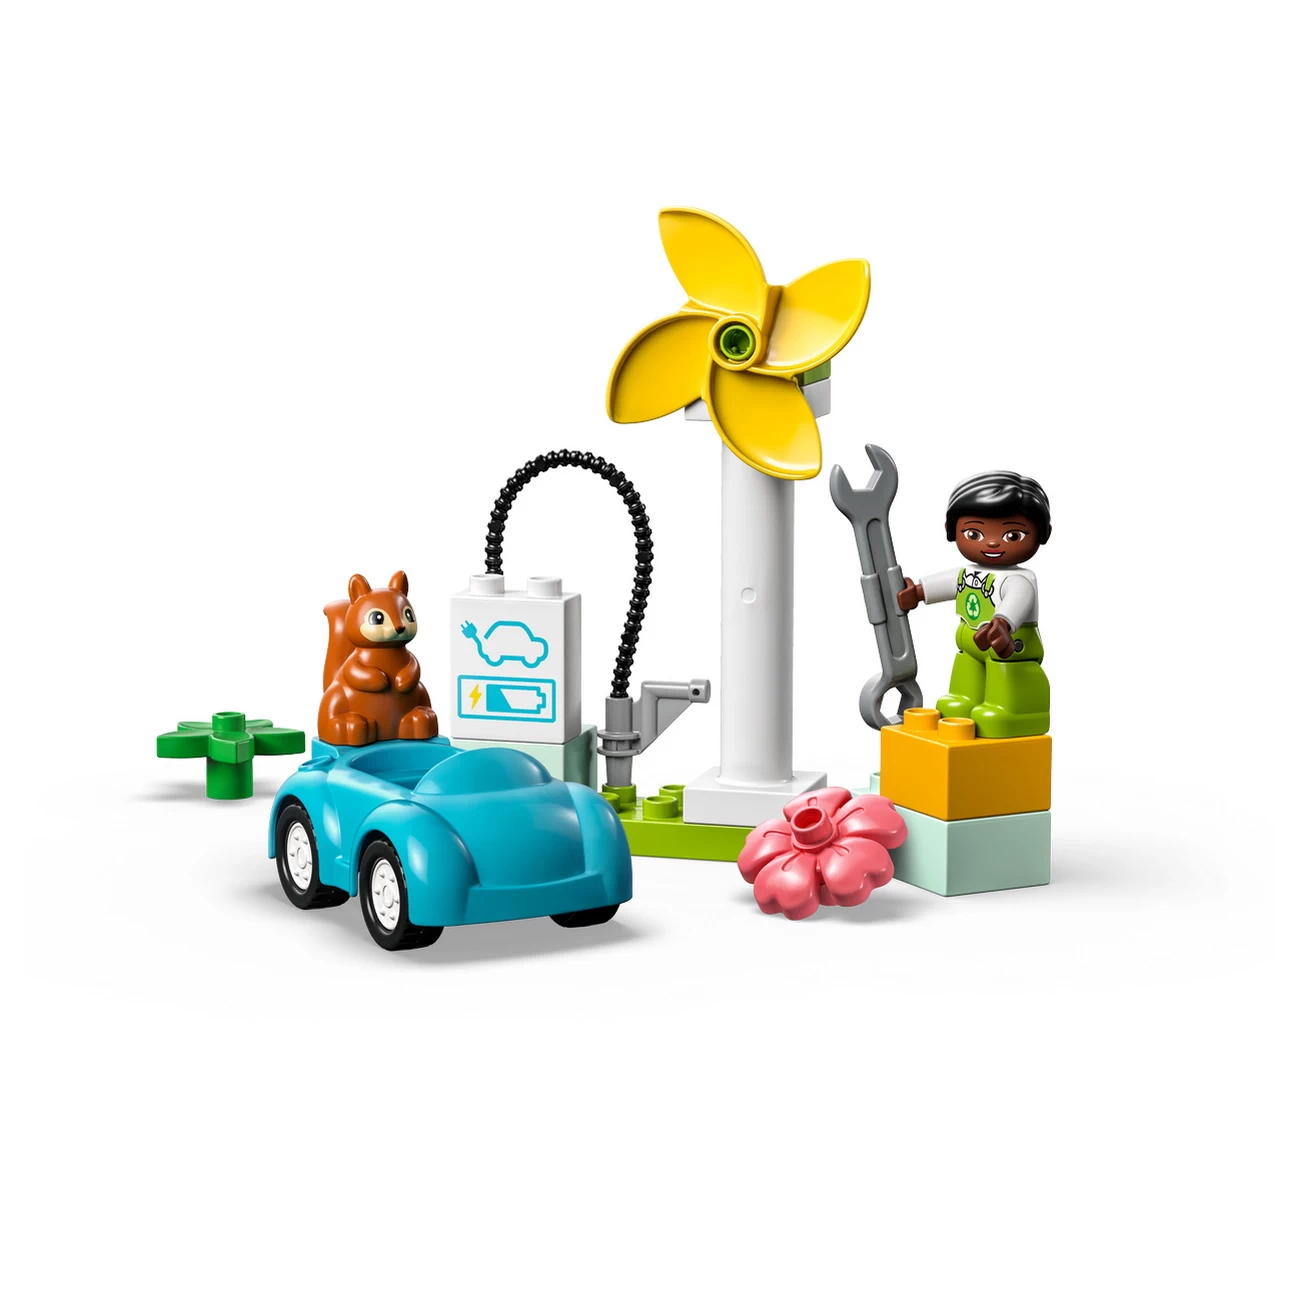 LEGO DUPLO 10985 - Windrad und Elektroauto